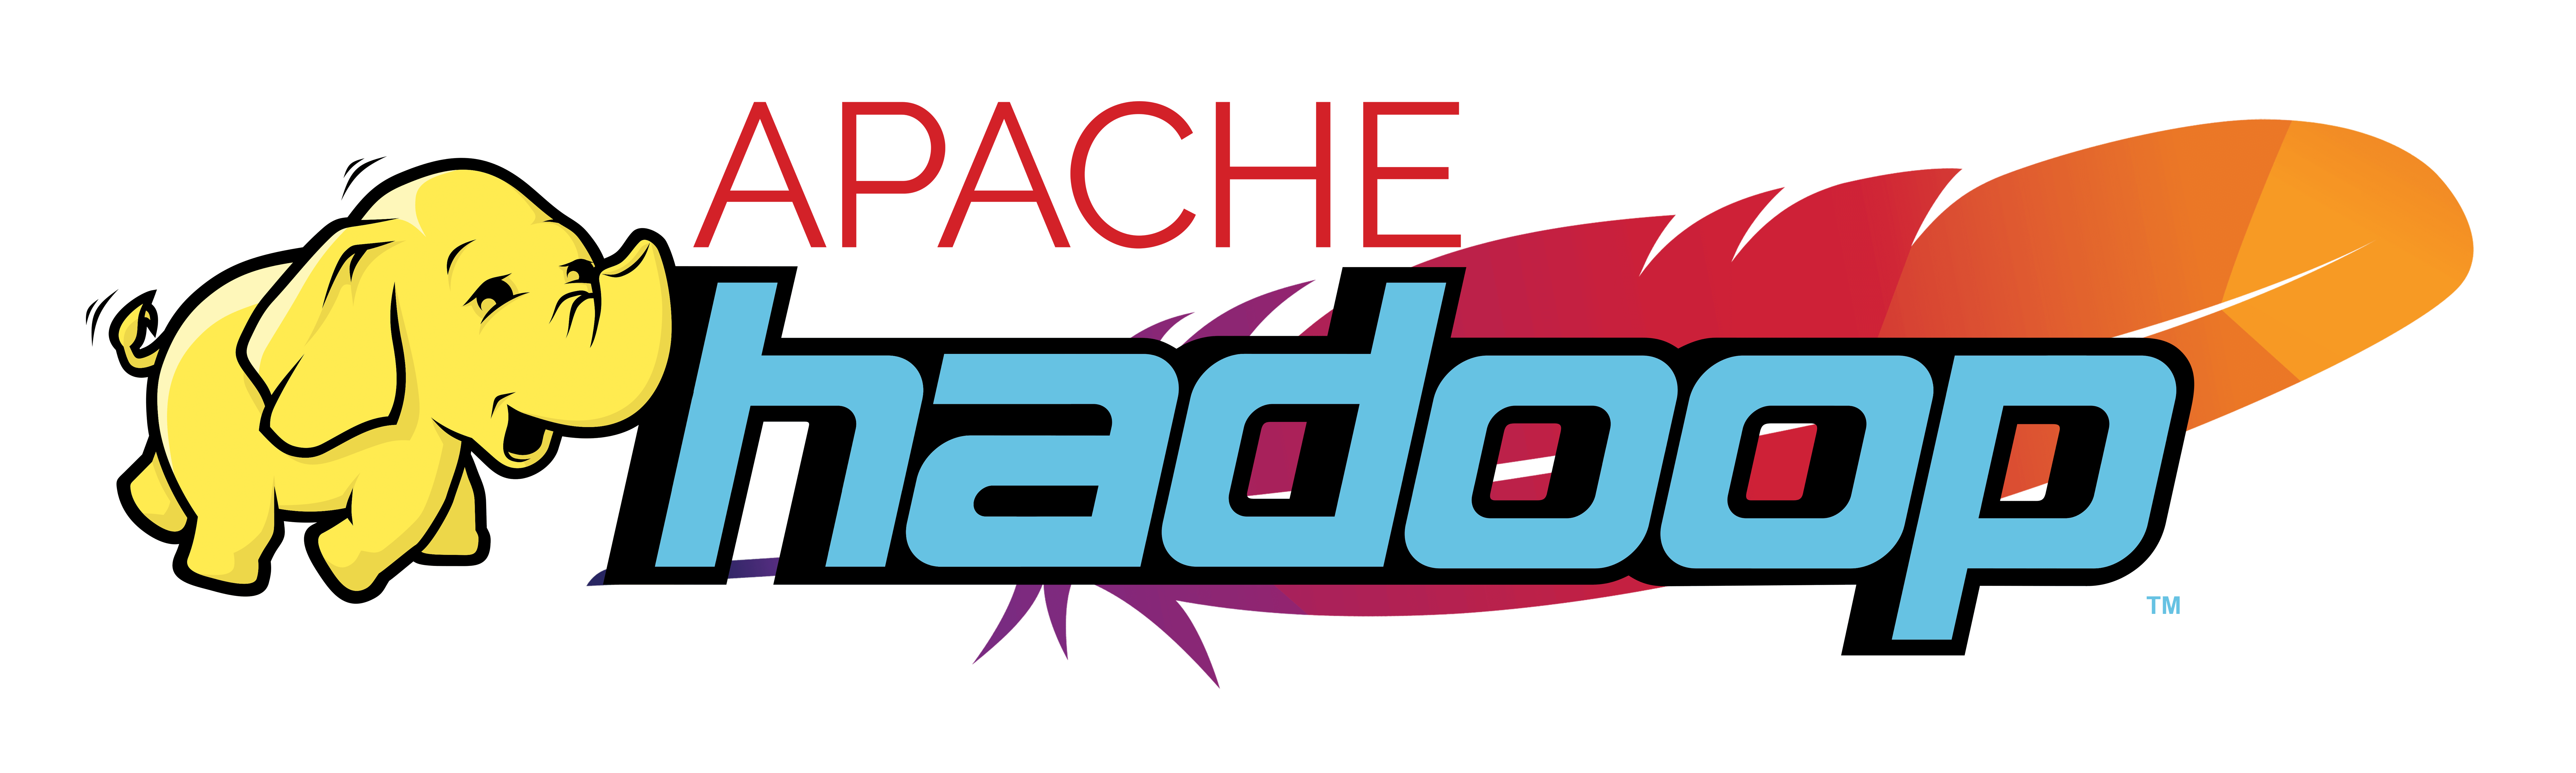 Hadoop logo, logotype